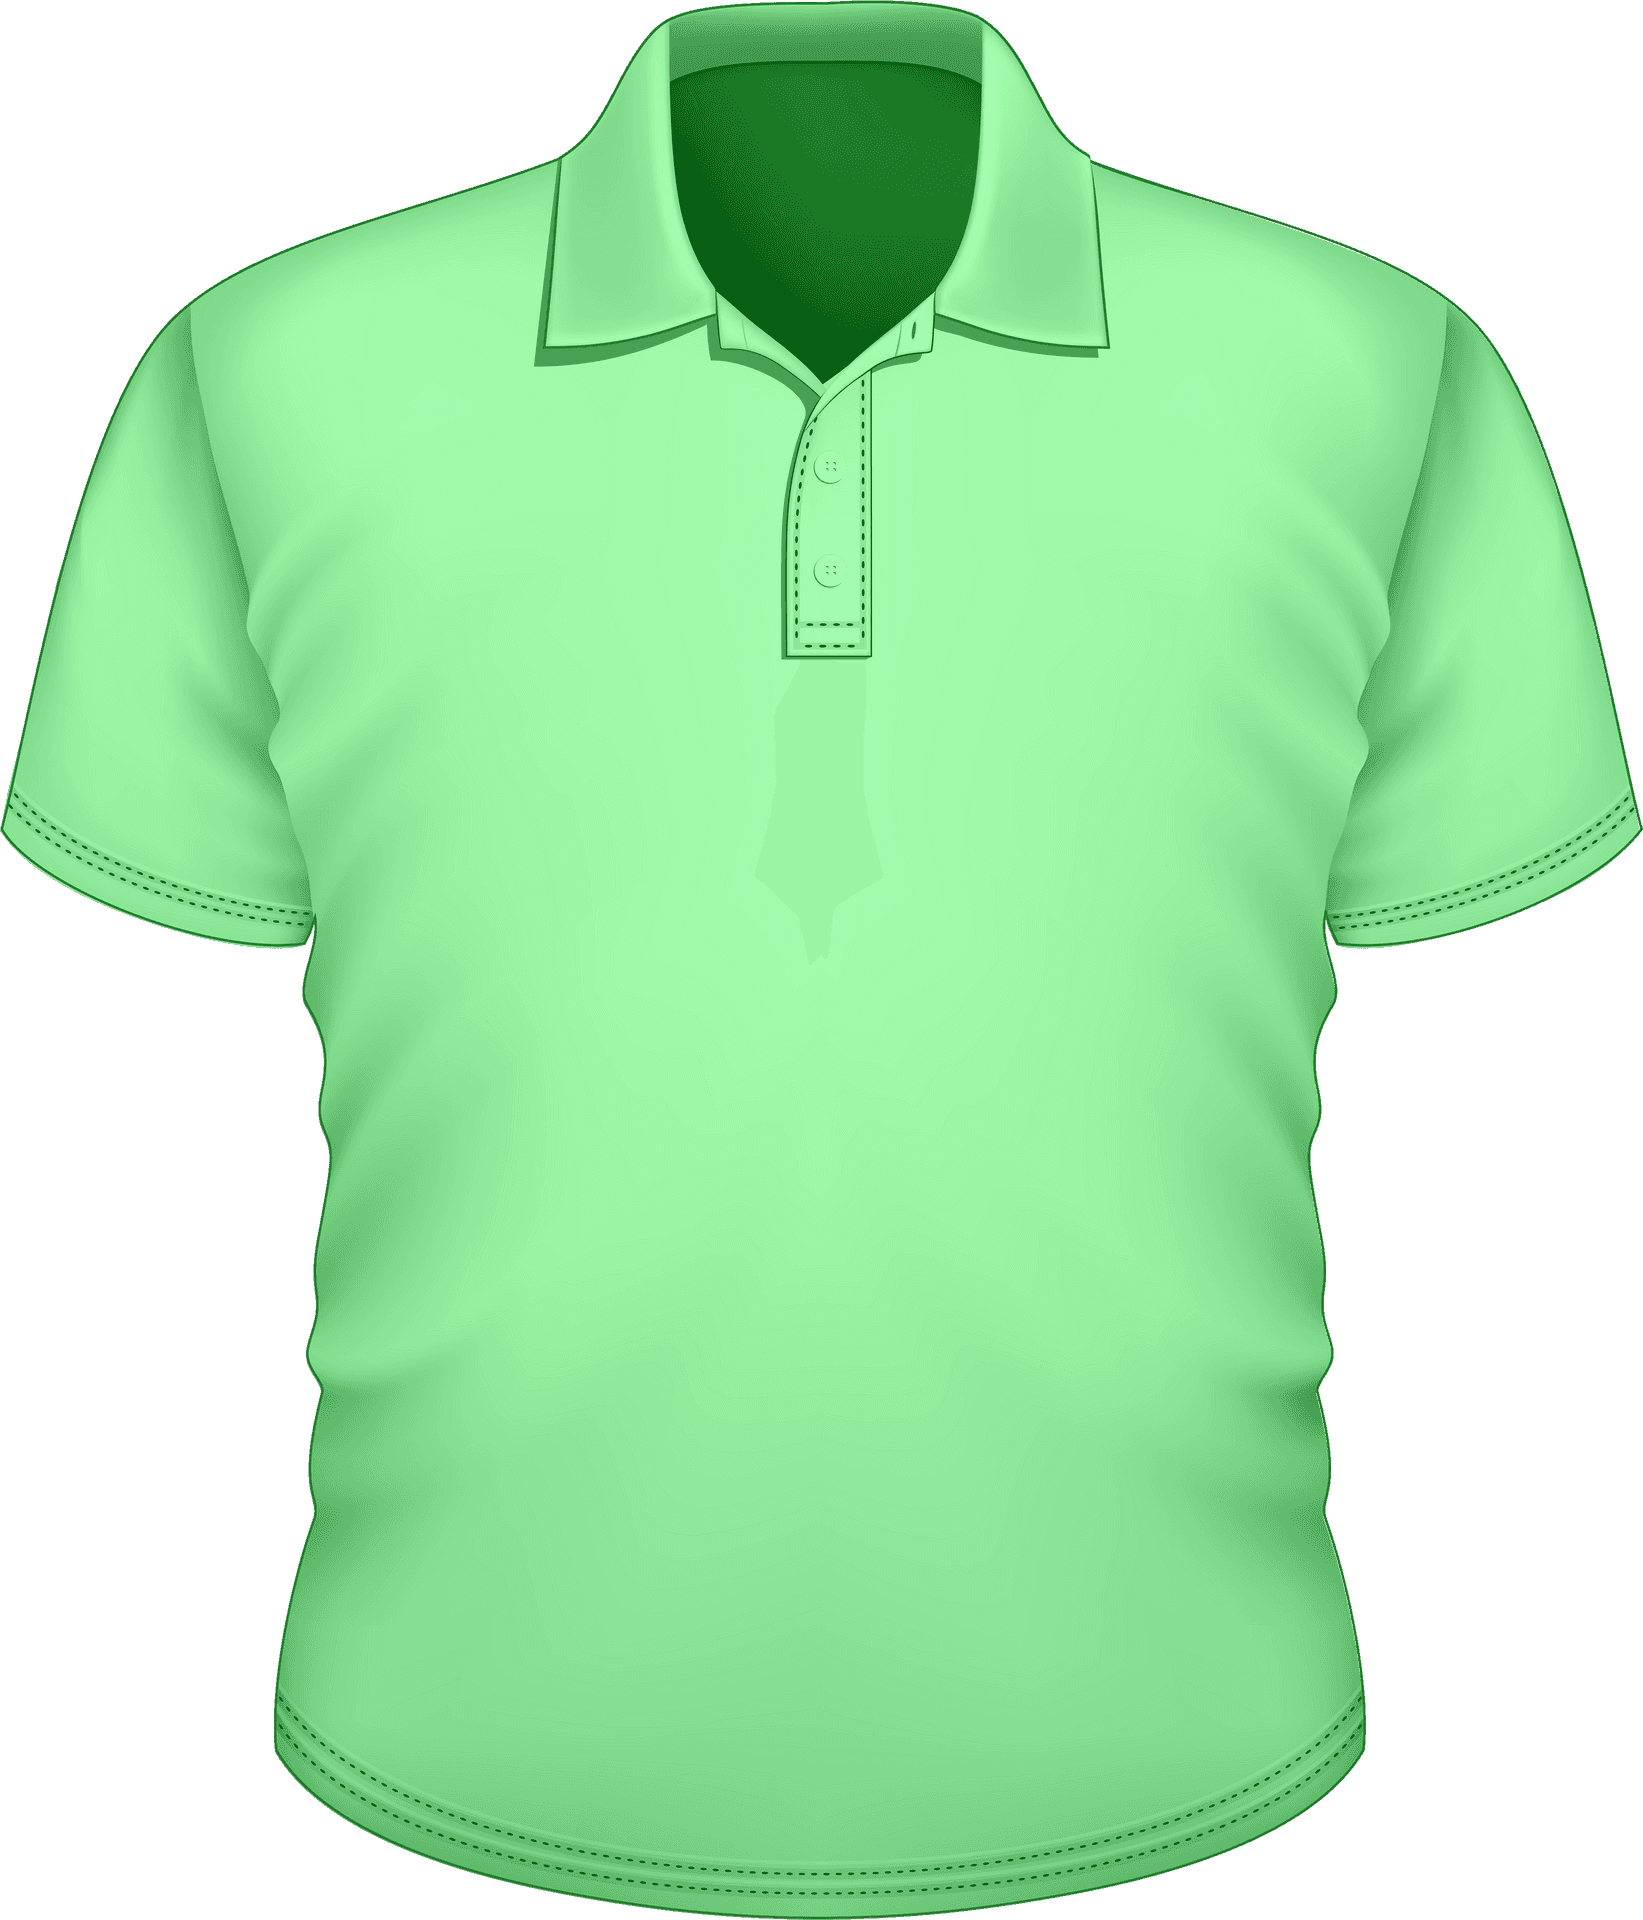 Green Polo Shirt Mockup PNG image